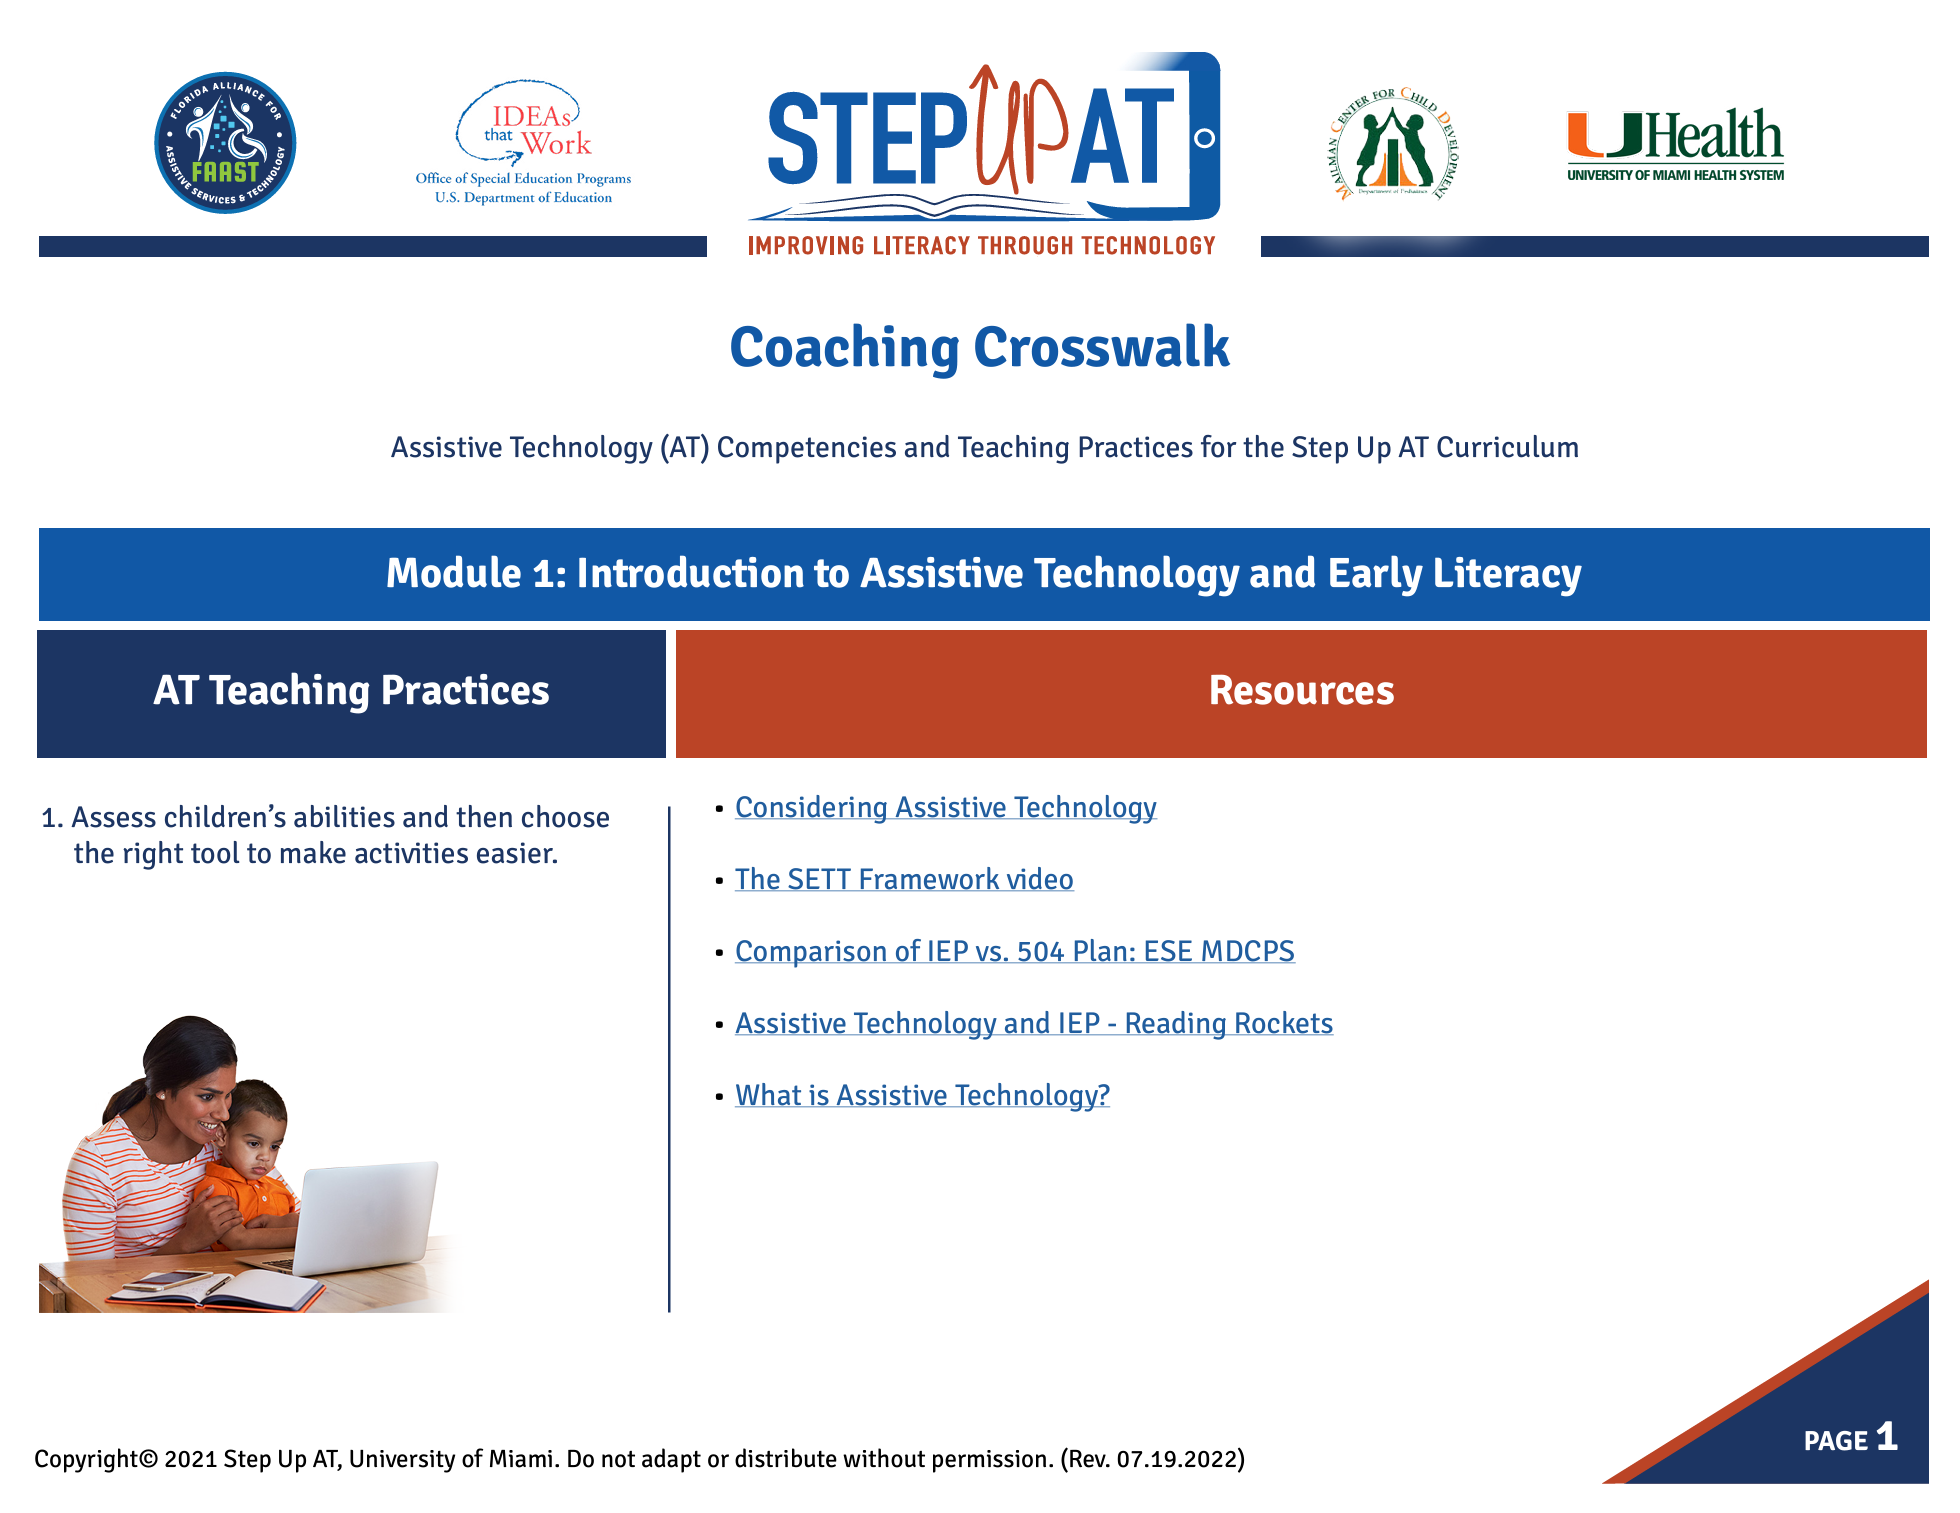 Screenshot of the Coaching Crosswalk